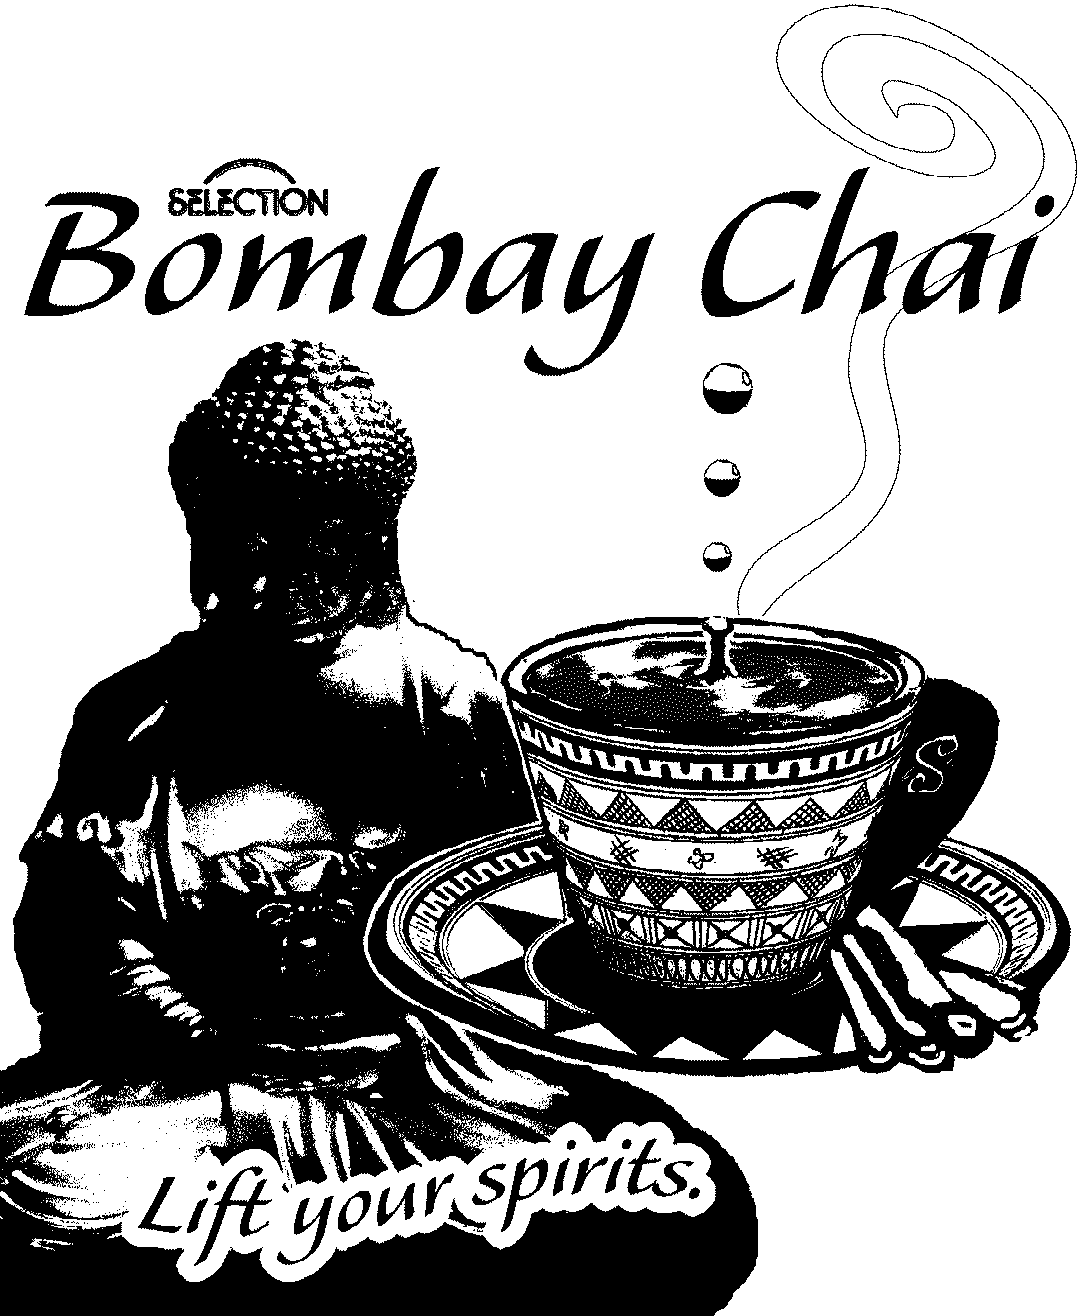  SELECTION BOMBAY CHAI - LIFT YOUR SPIRITS